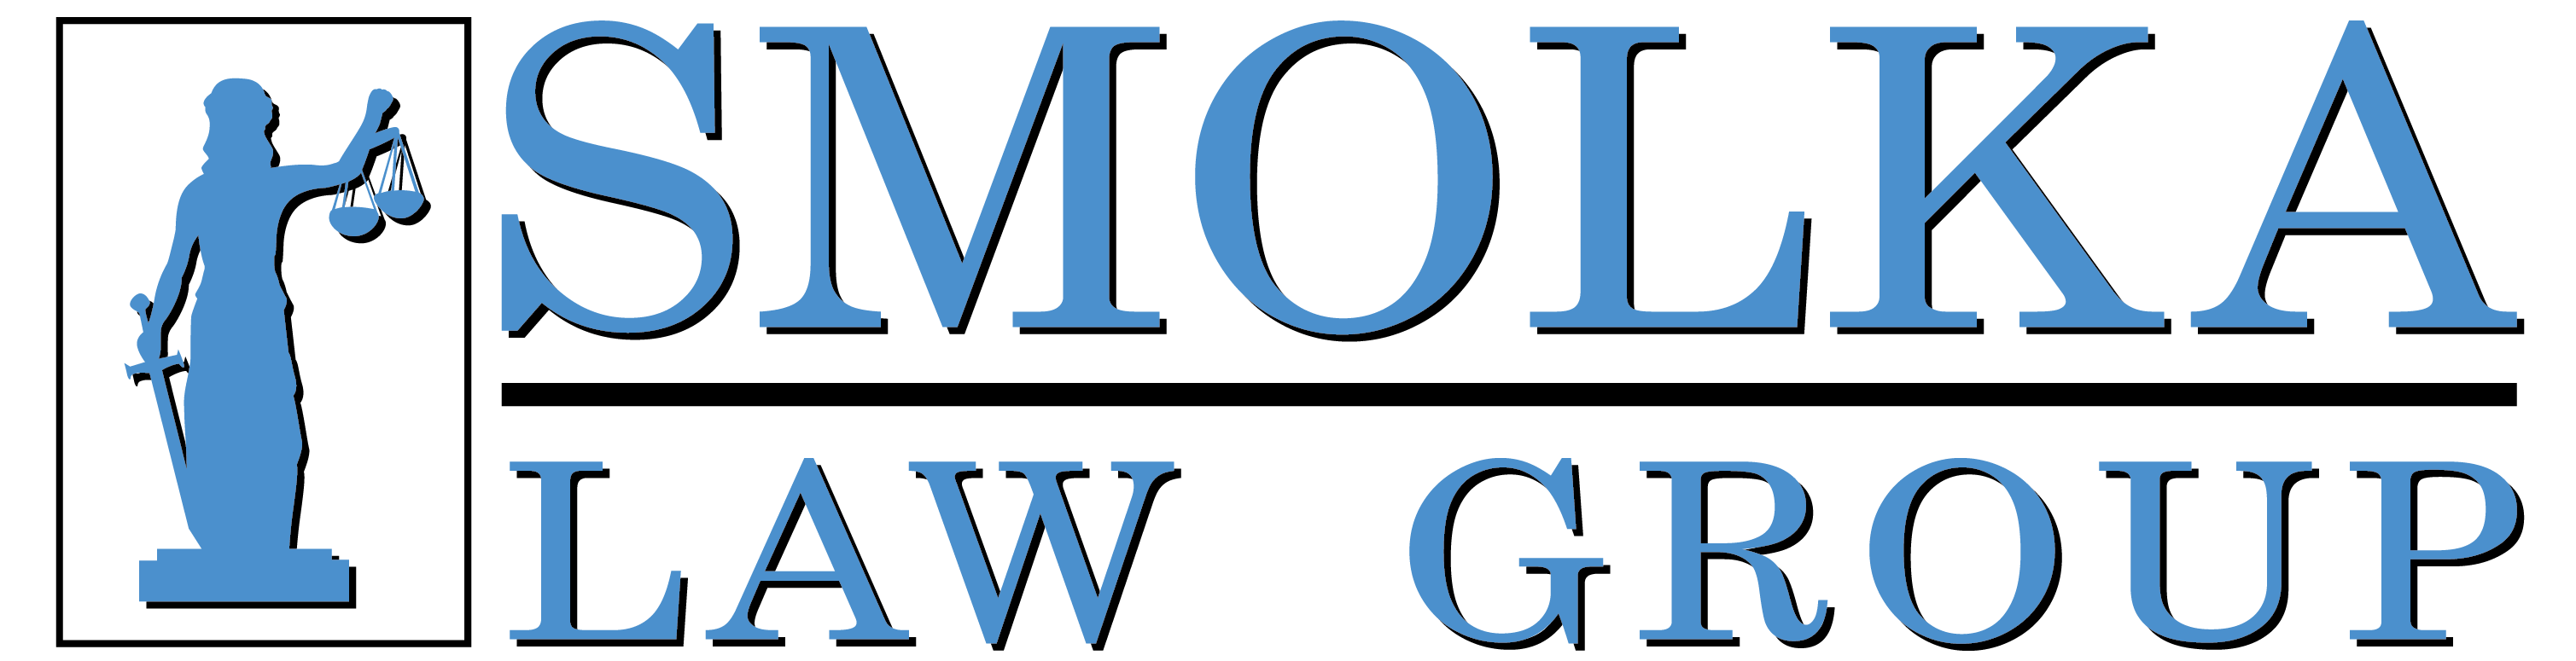 cropped-Smolka-Law-Logo-Revised-blue-2020-01.png